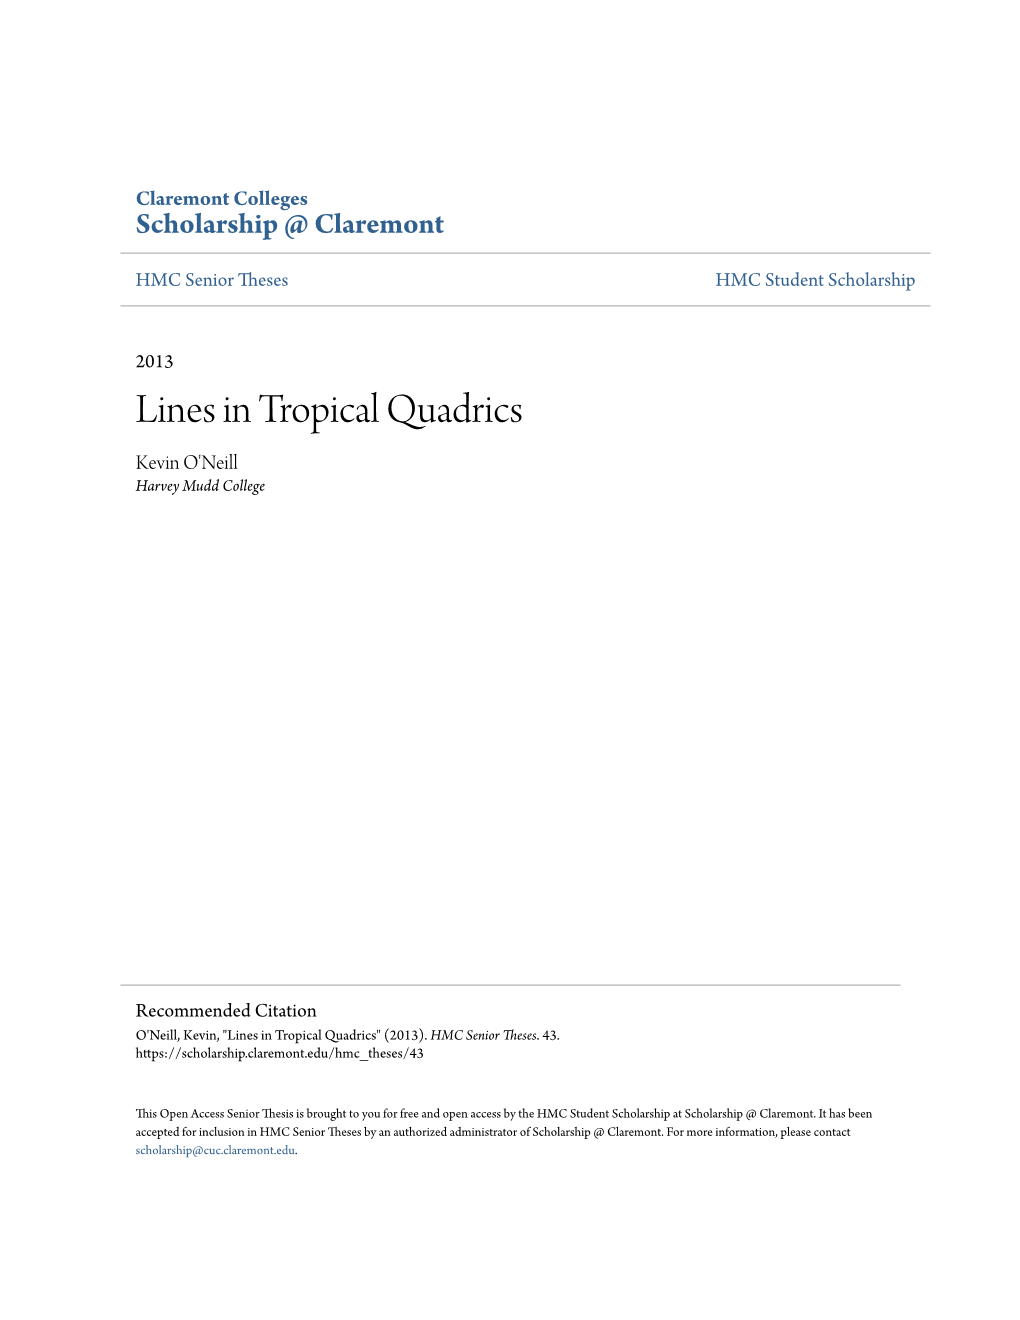 Lines in Tropical Quadrics Kevin O'neill Harvey Mudd College